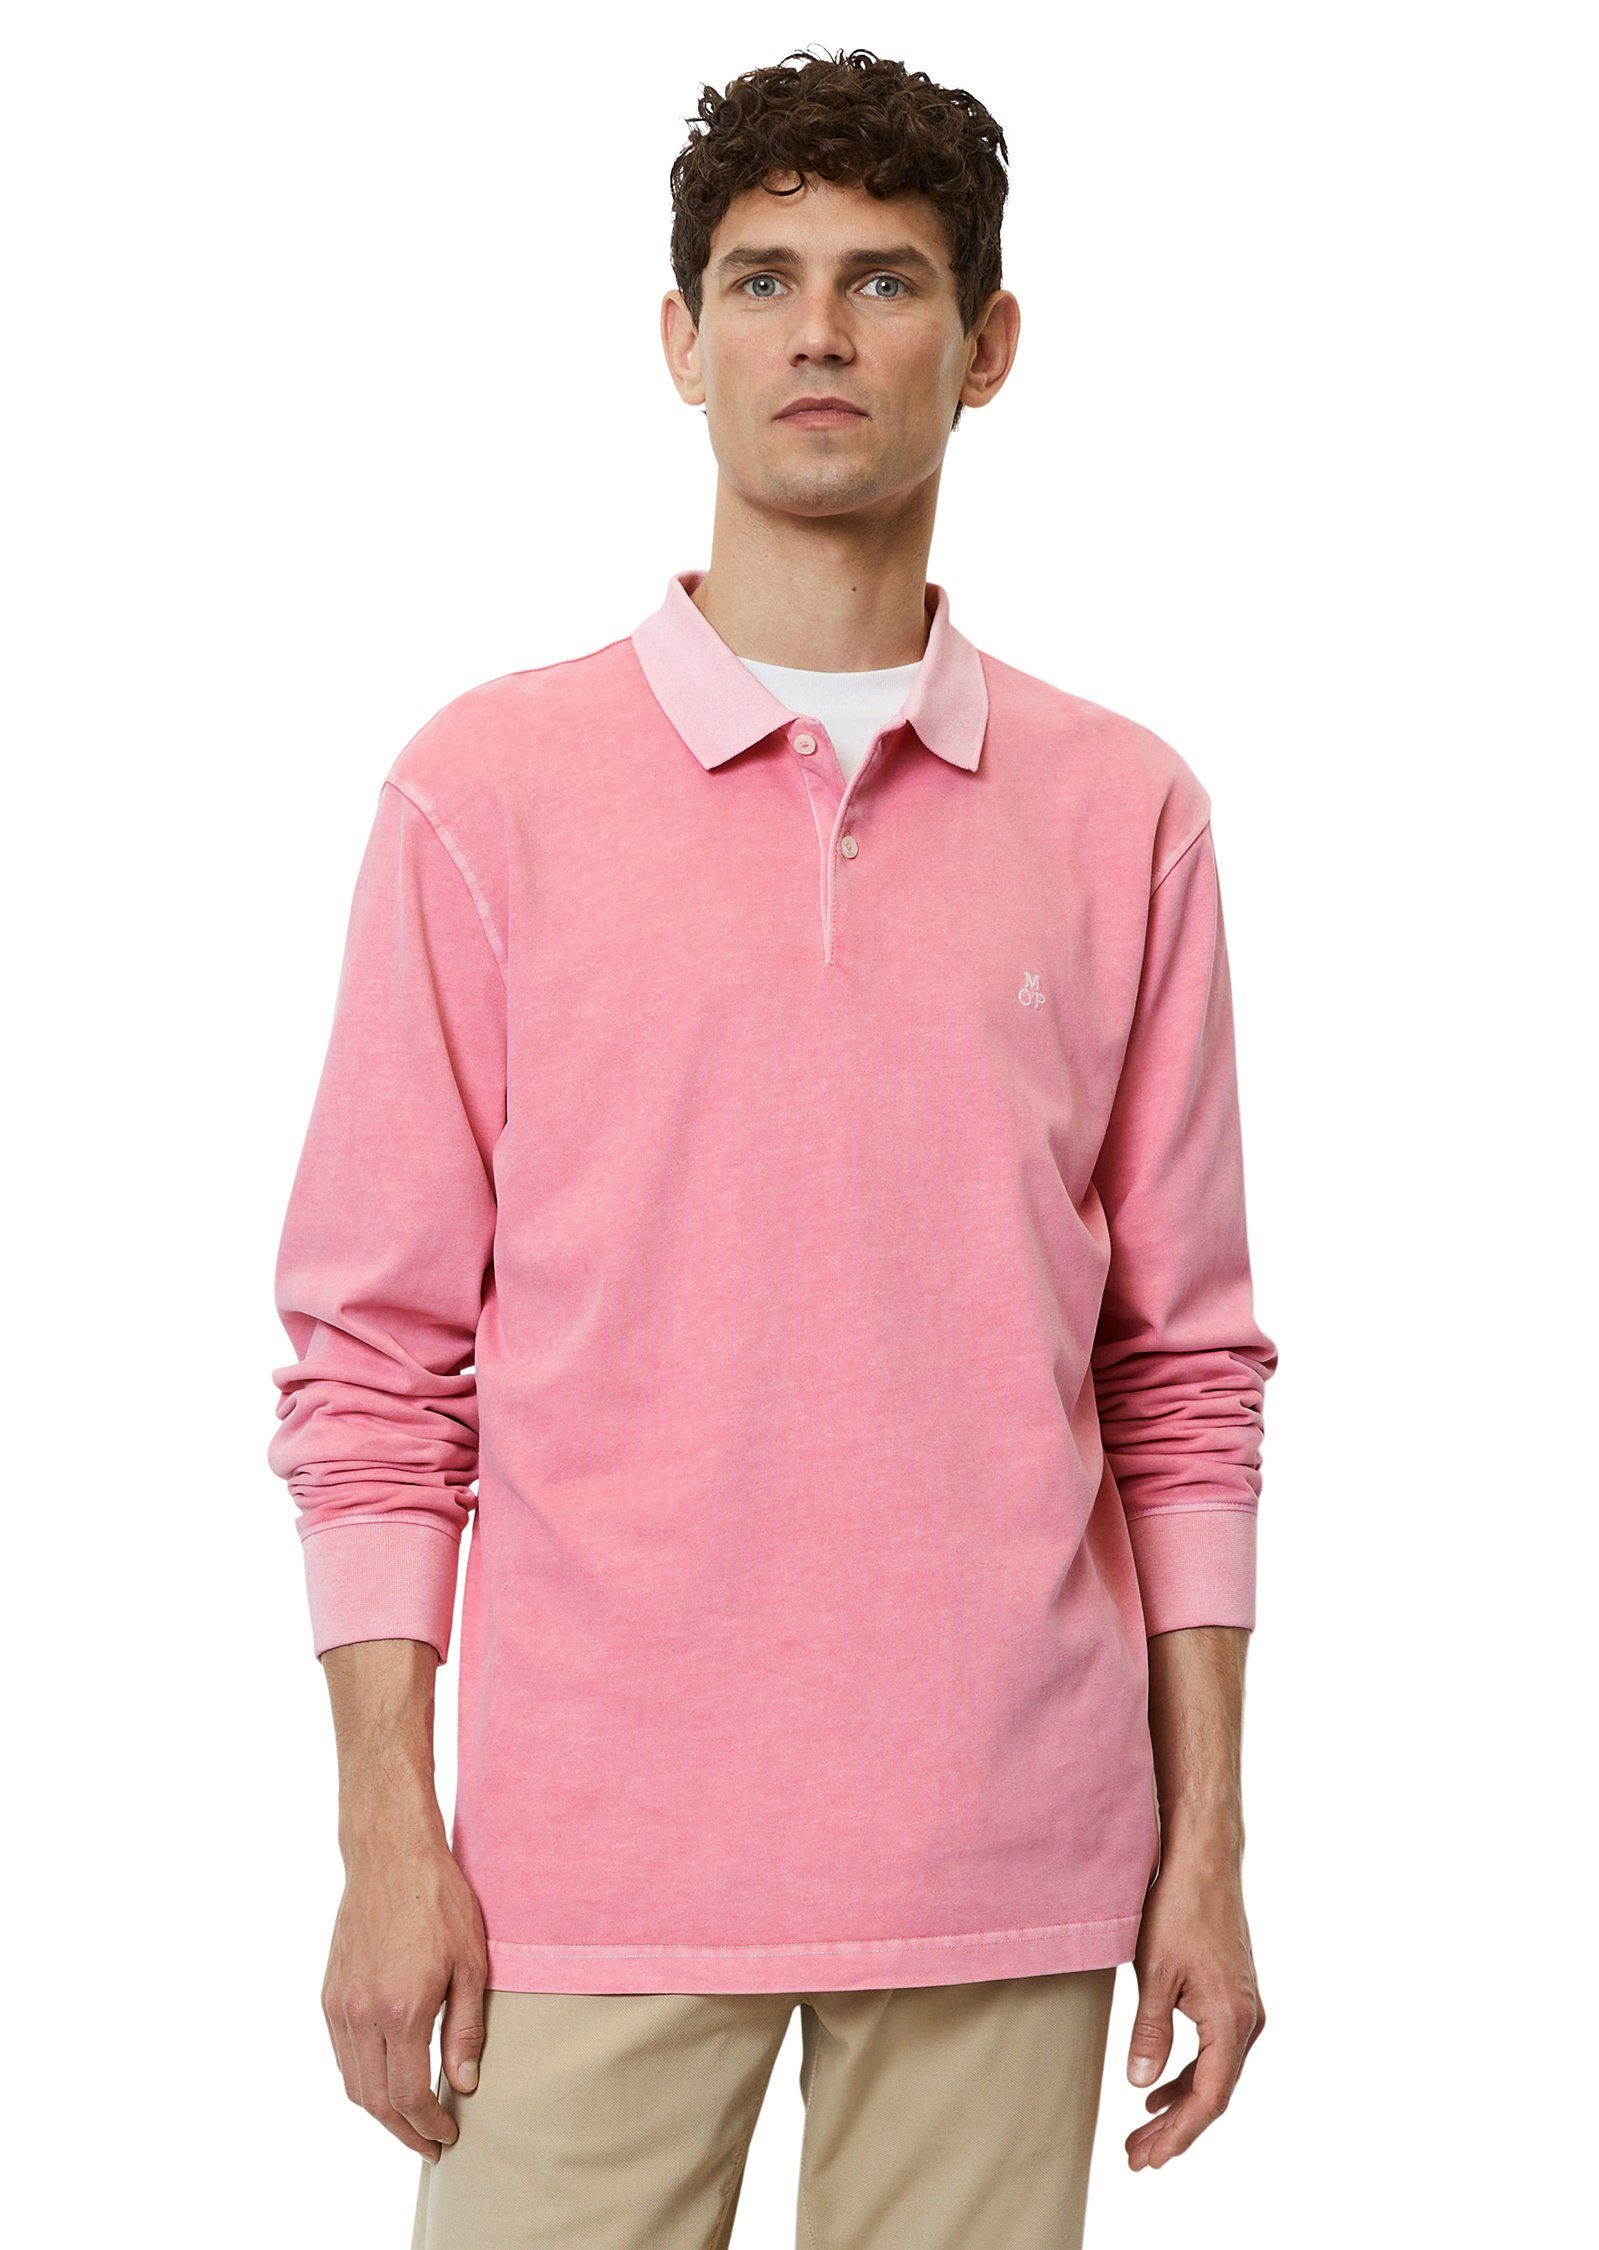 Marc O'Polo in Soft-Touch-Jersey-Qualität schwerer Langarm-Poloshirt rosa